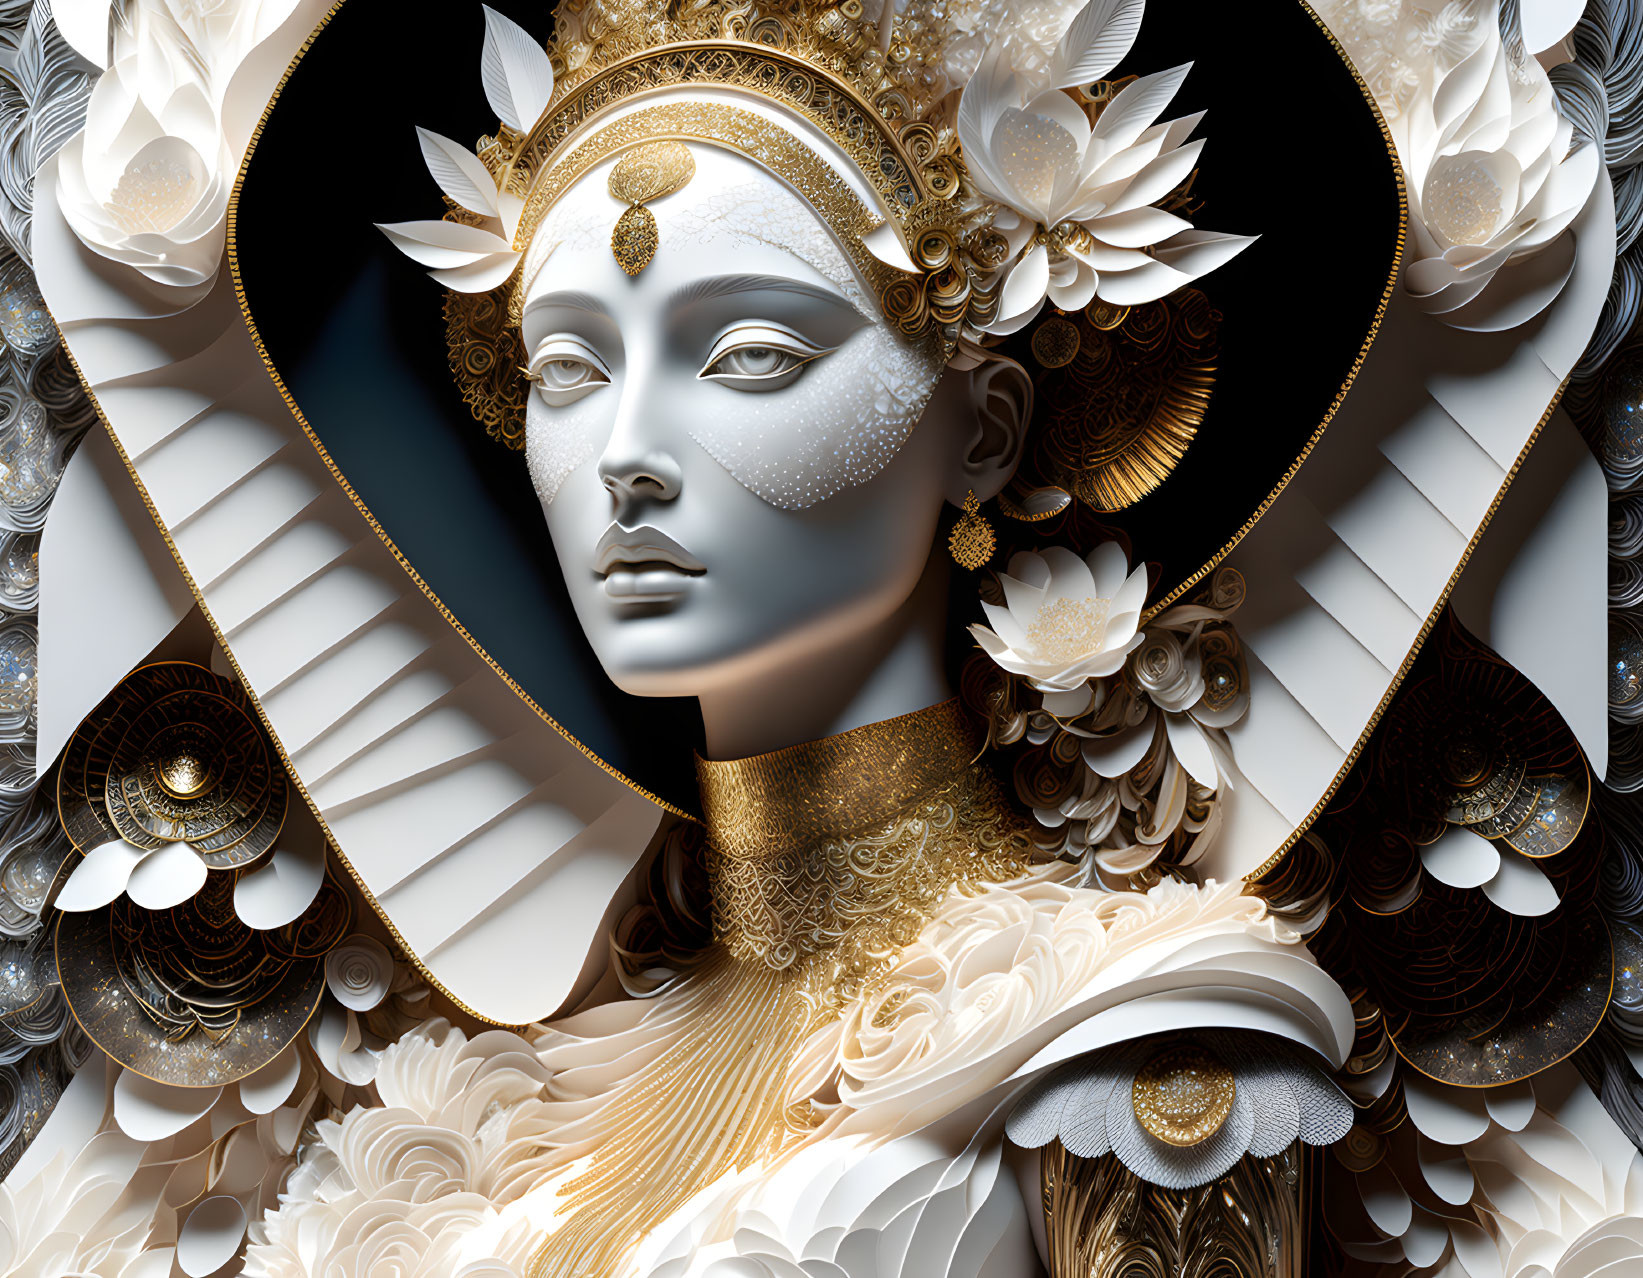 Digital artwork: Woman with ornamental headdress, white & golden floral motifs, feathers, dark background